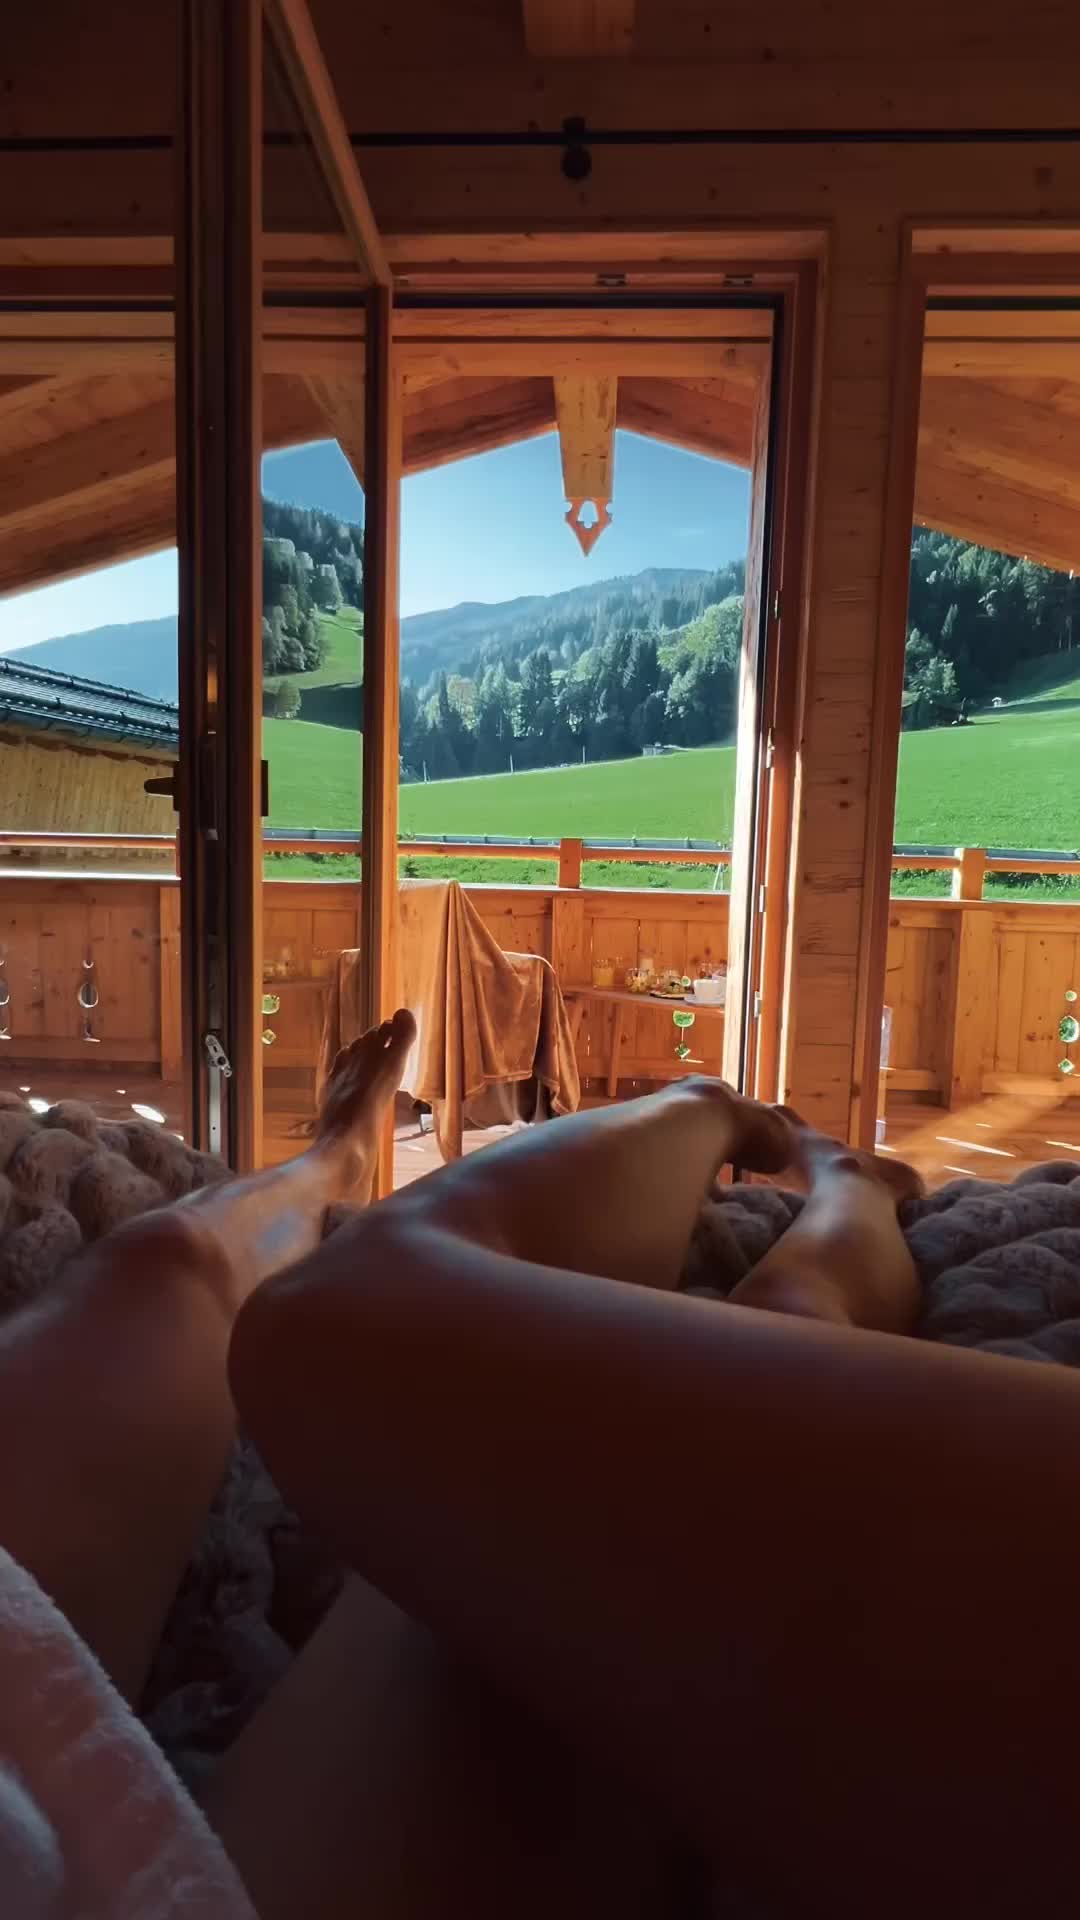 Cozy Morning at Hygna Chalets, Austria